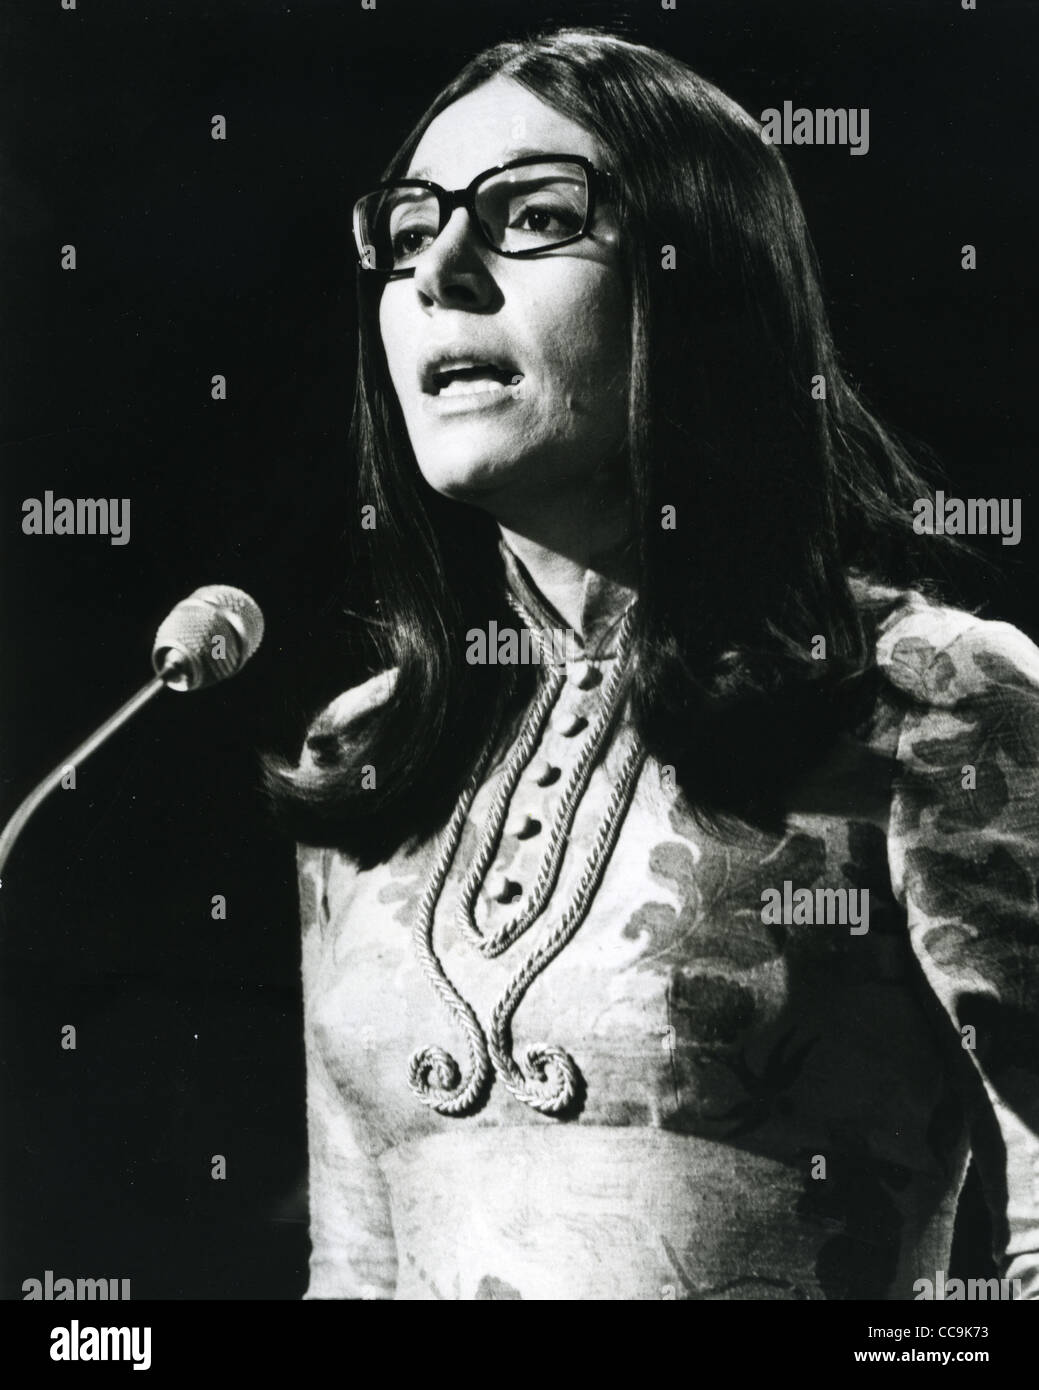 NANA MOUSKOURI  Promotional photo of Greek singer about 1968 Stock Photo